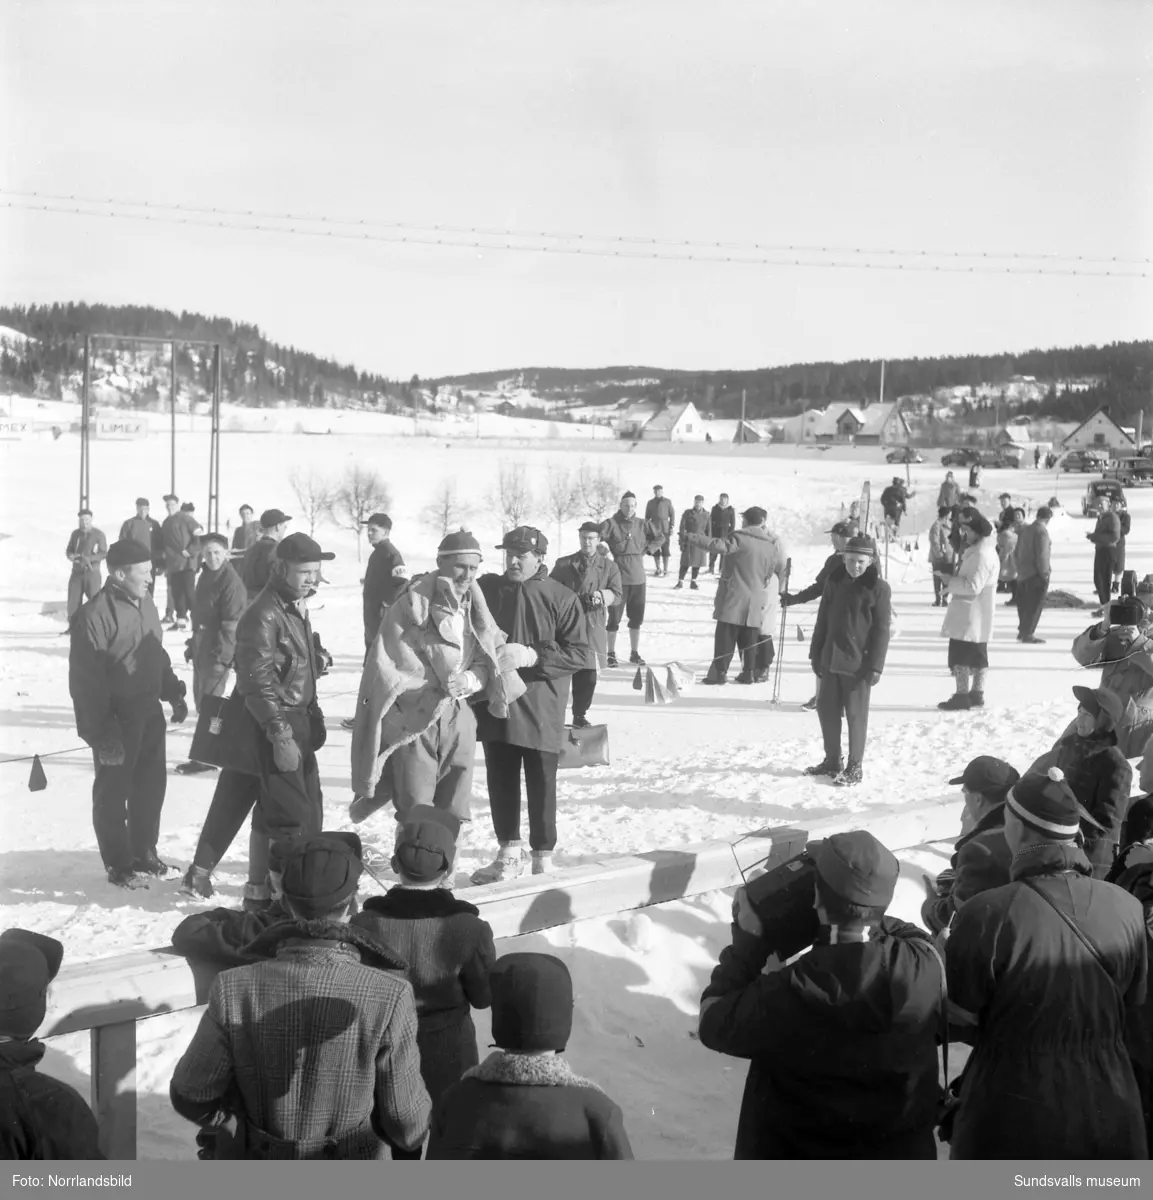 Skid-SM i Bergsåker, Sundsvall, 1955. 50 km herrar, vinnare Sixten Jernberg, Lima IF.